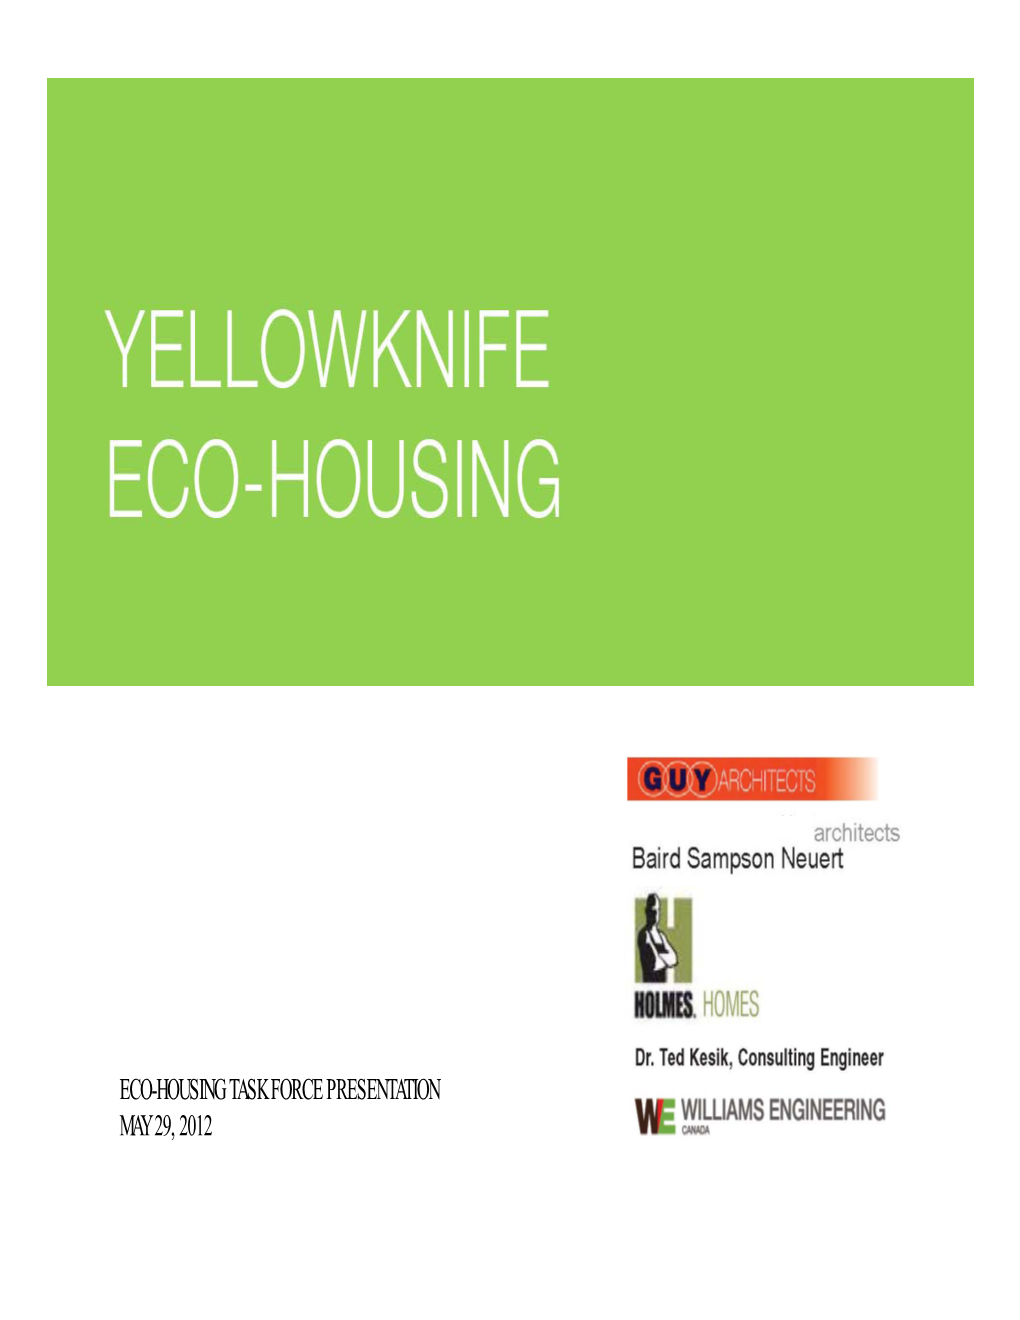 Eco-Housing Task Force Presentation May 29, 2012 Agenda